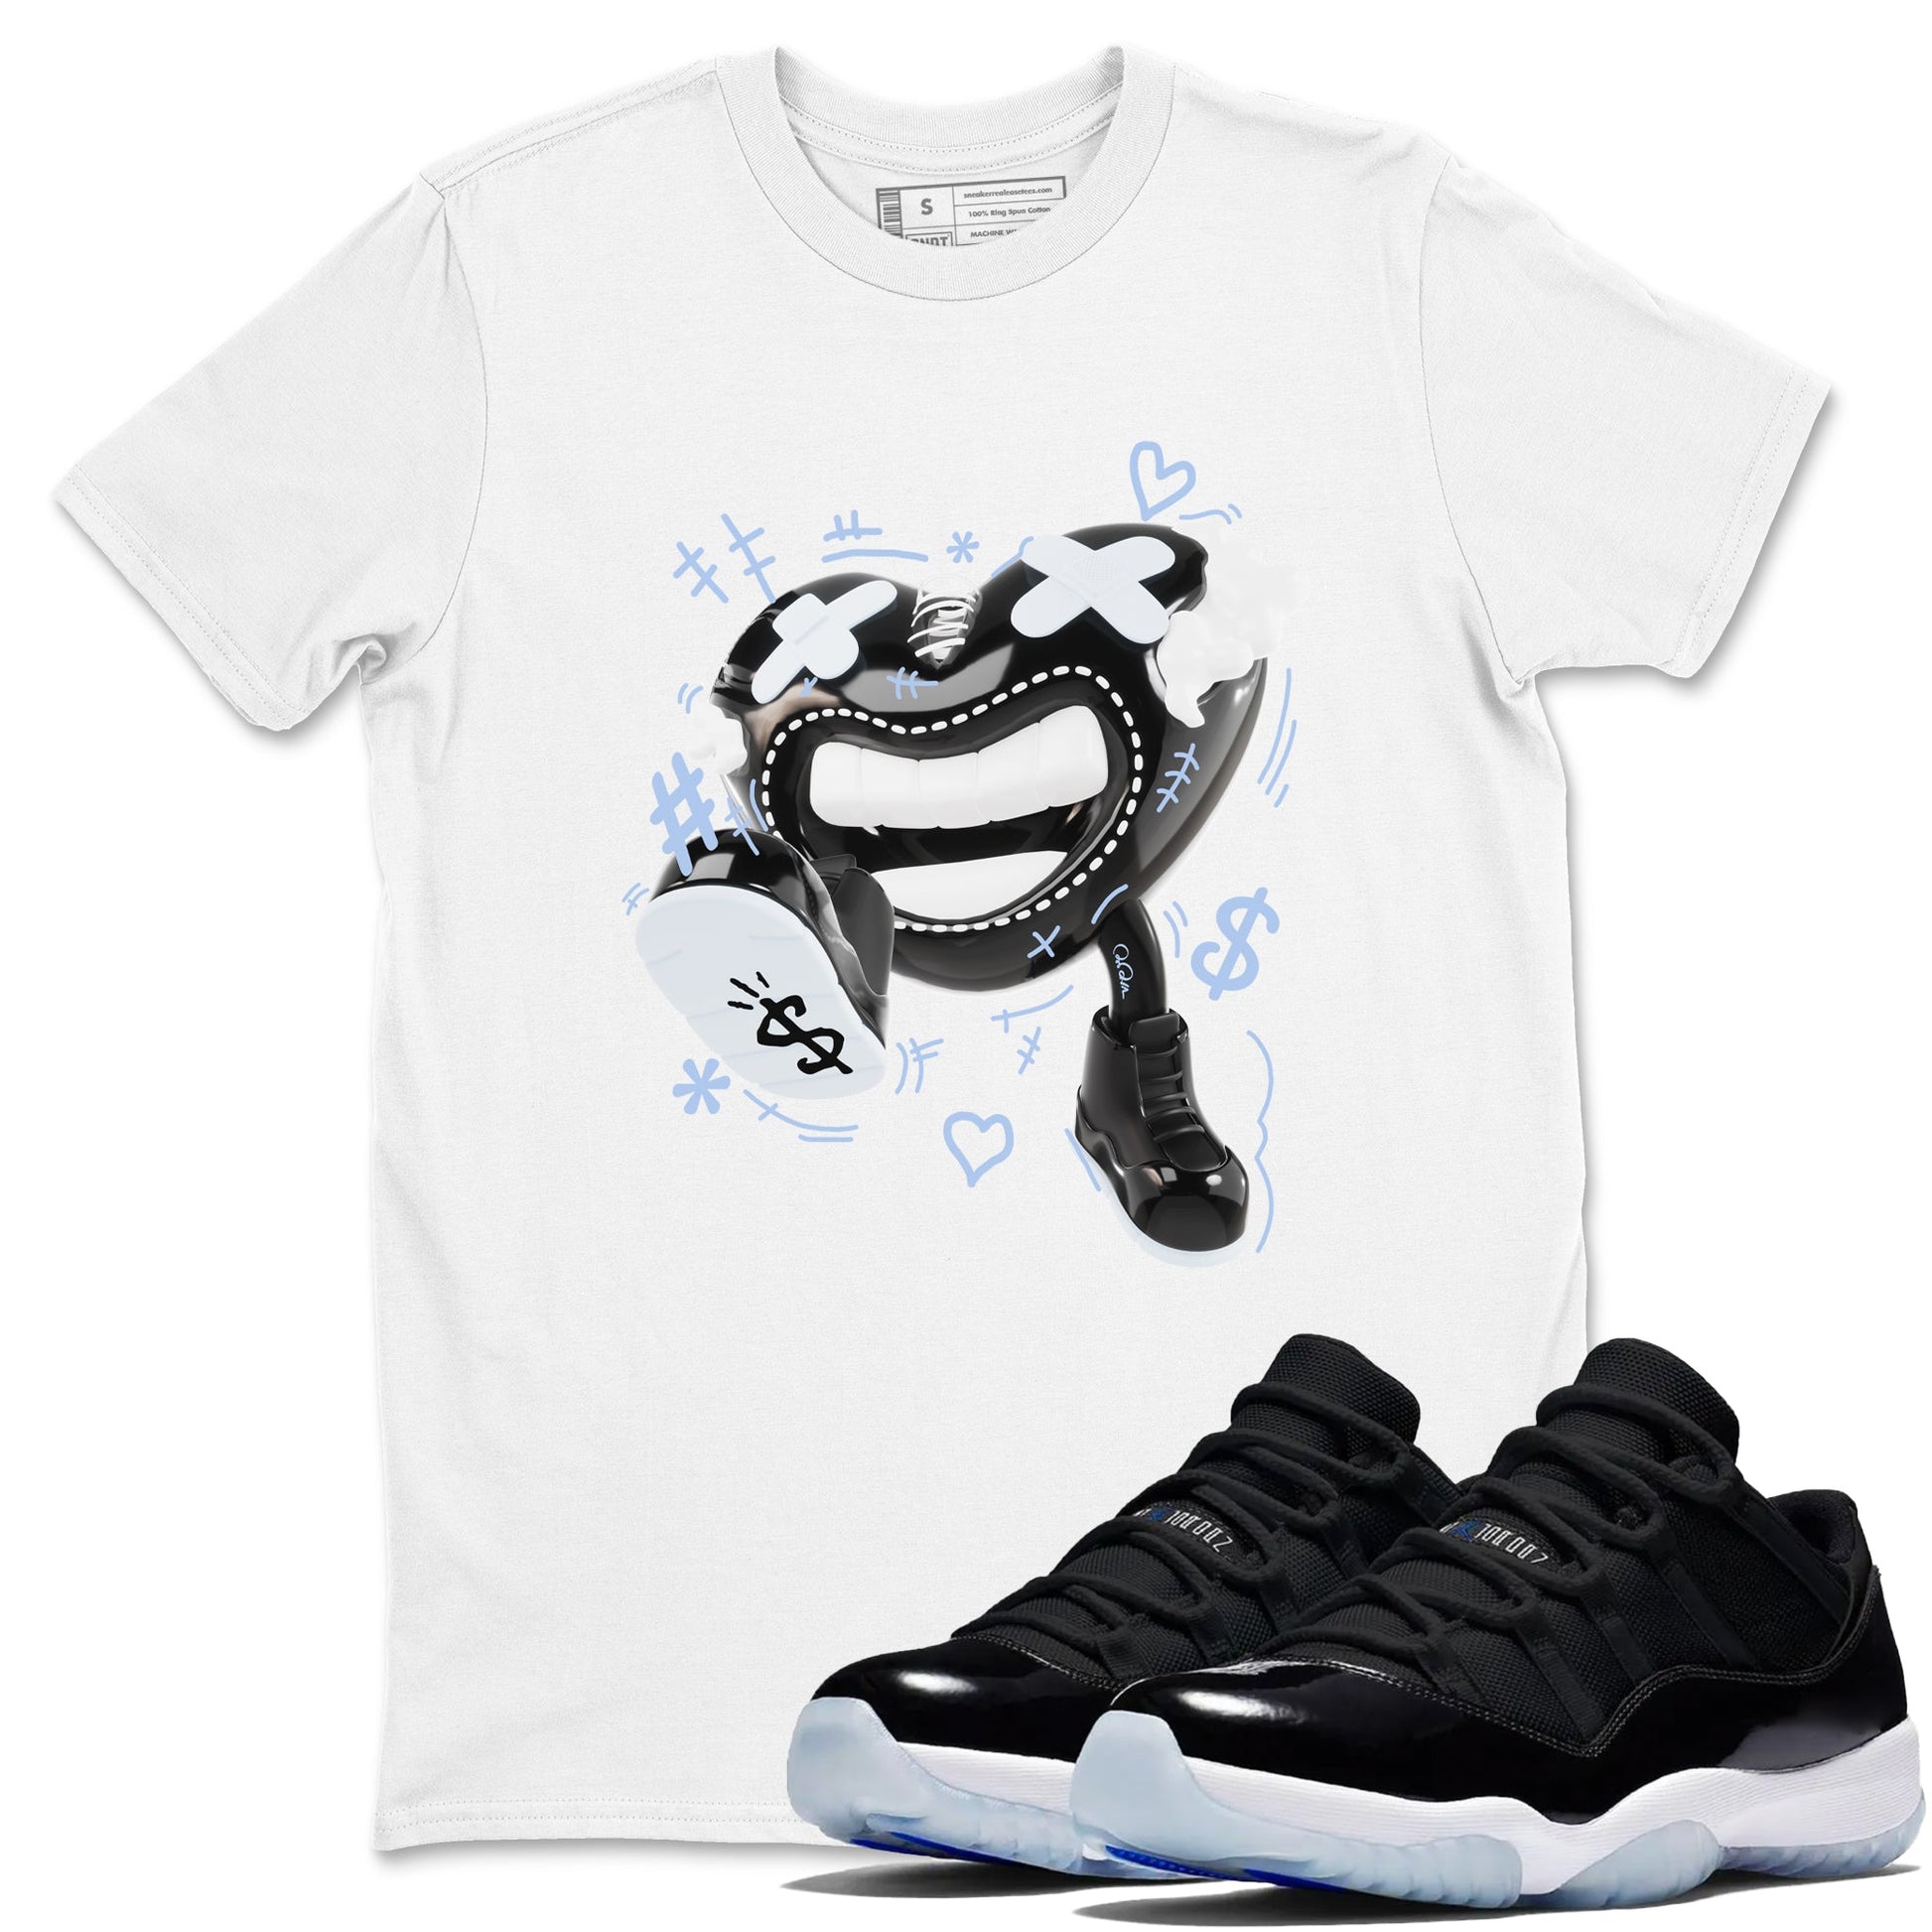 11s Black and Varsity Royal shirt to match jordans Walk In Love sneaker tees Air Jordan 11 Black/Varsity Royal SNRT Sneaker Release Tees Unisex White 1 T-Shirt